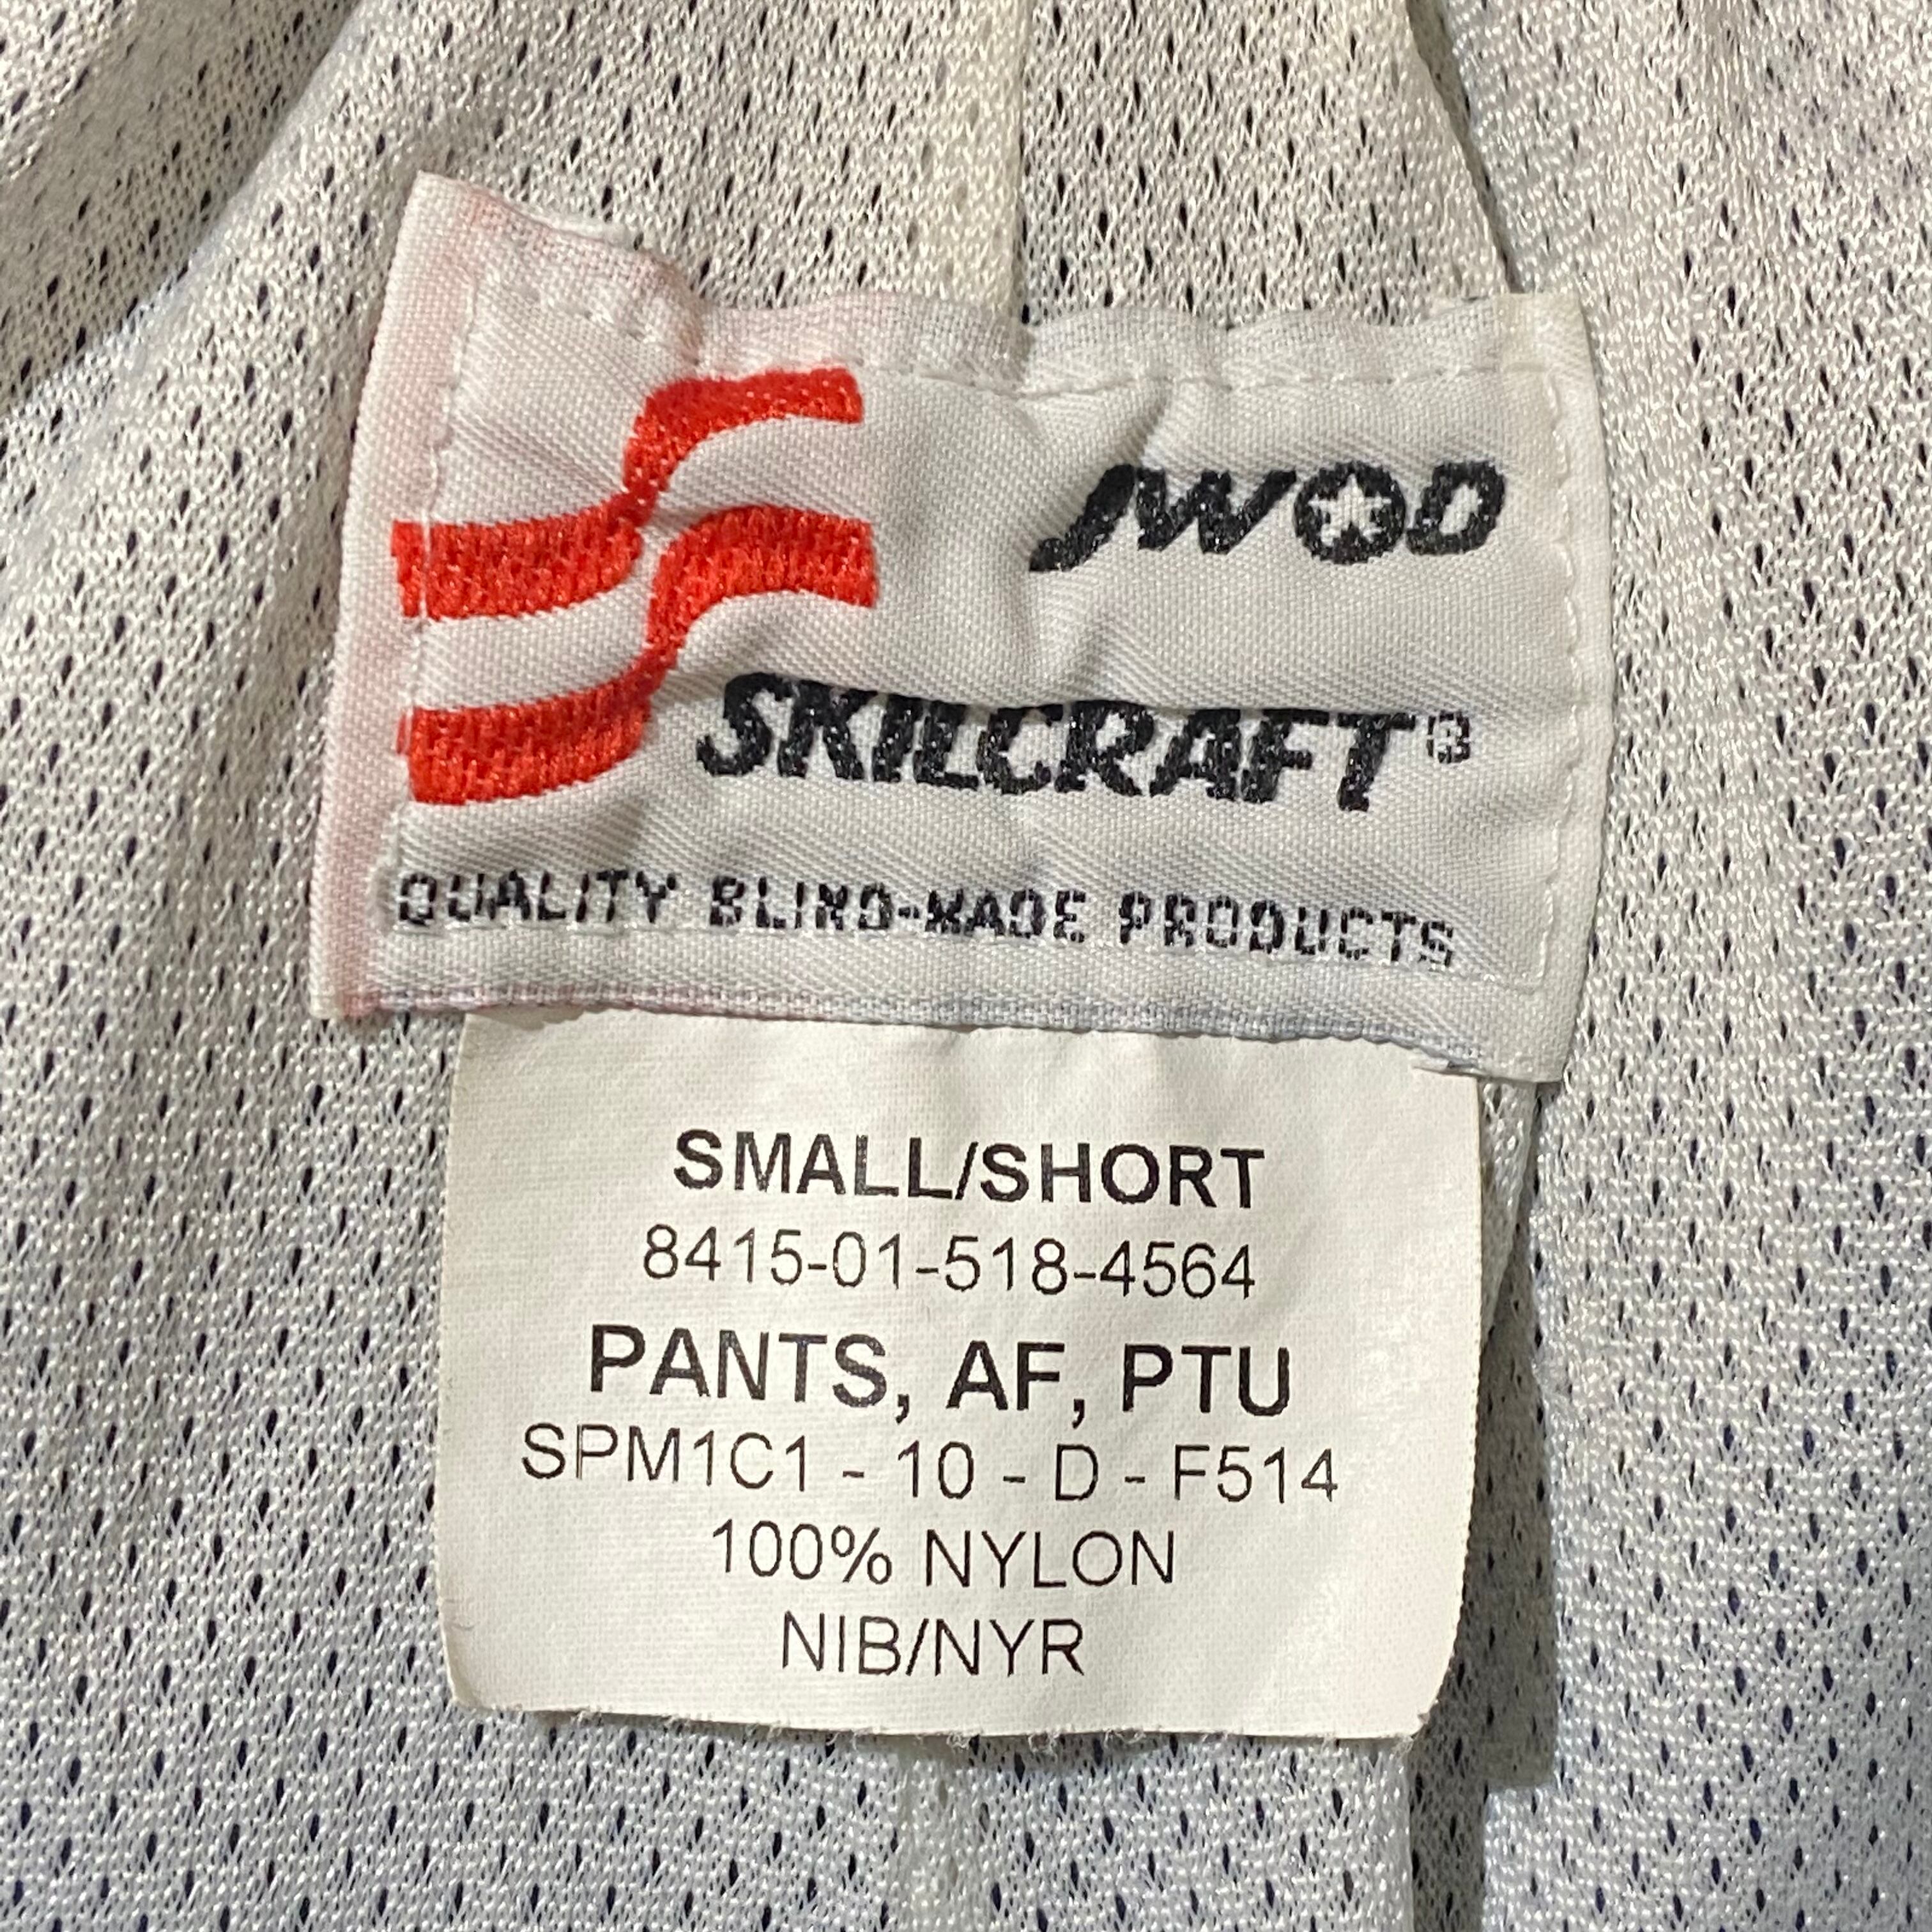 SKILCRAFT SMALL/SHORT